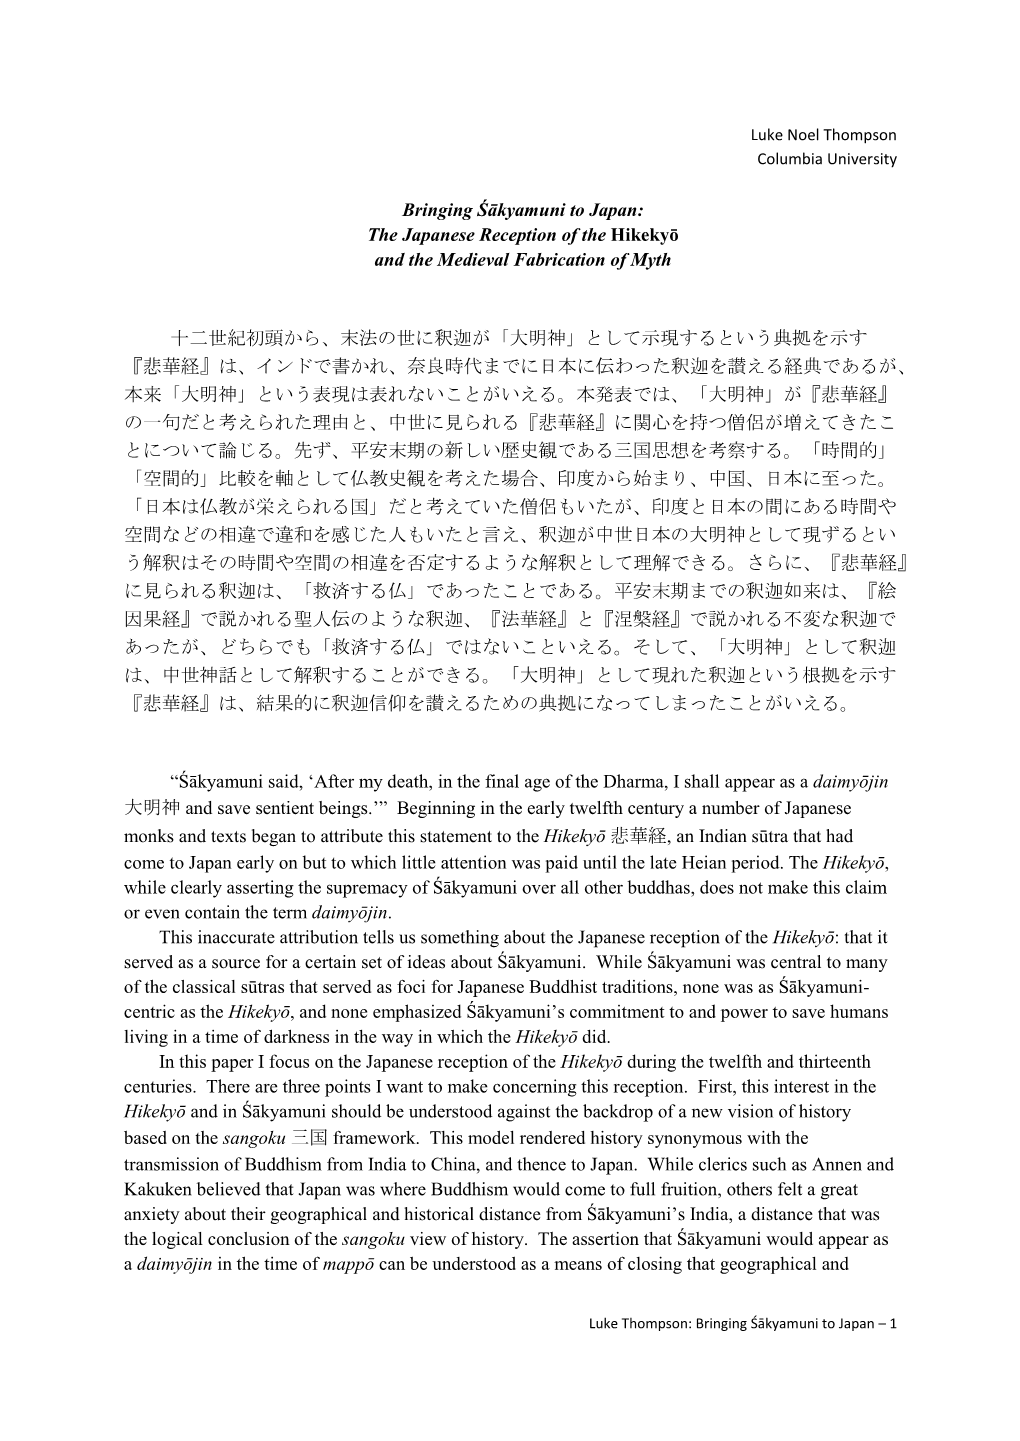 Bringing Śākyamuni to Japan: the Japanese Reception of the Hikekyō and the Medieval Fabrication of Myth